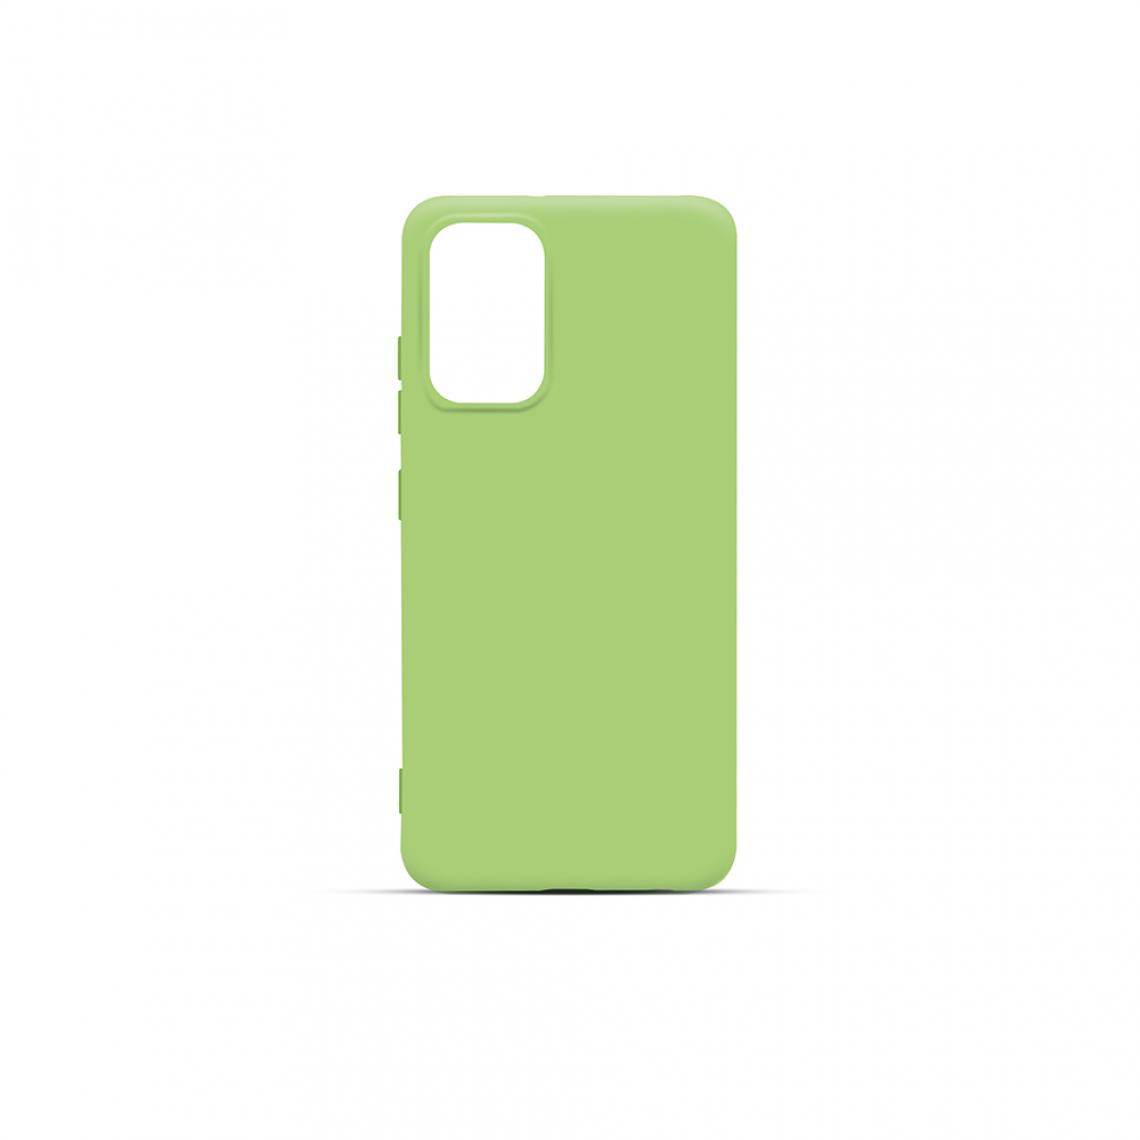 Mooov - Coque souple pour Samsung A02s/A03s - vert clair - Coque, étui smartphone